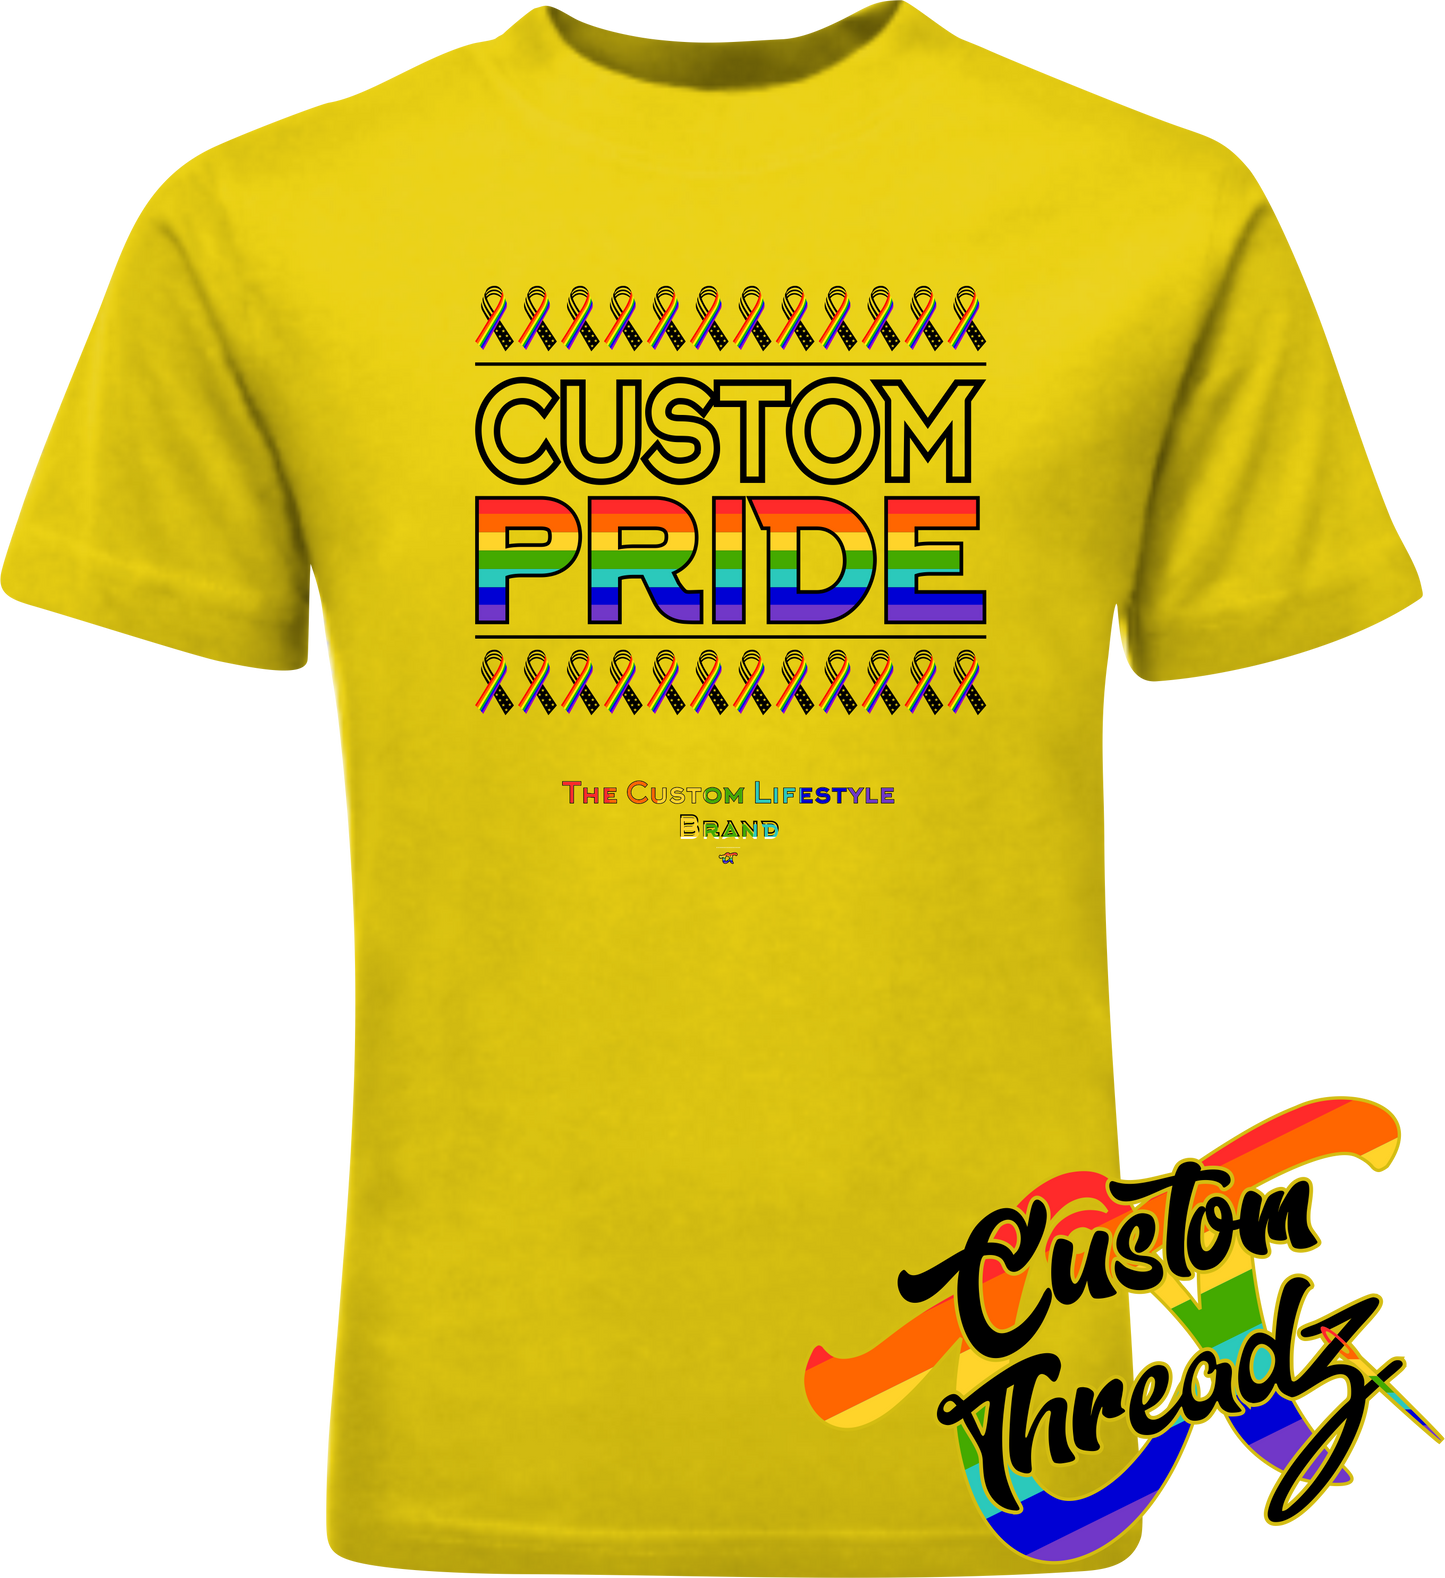 yellow tee with custom pride rainbow pride flag DTG printed design